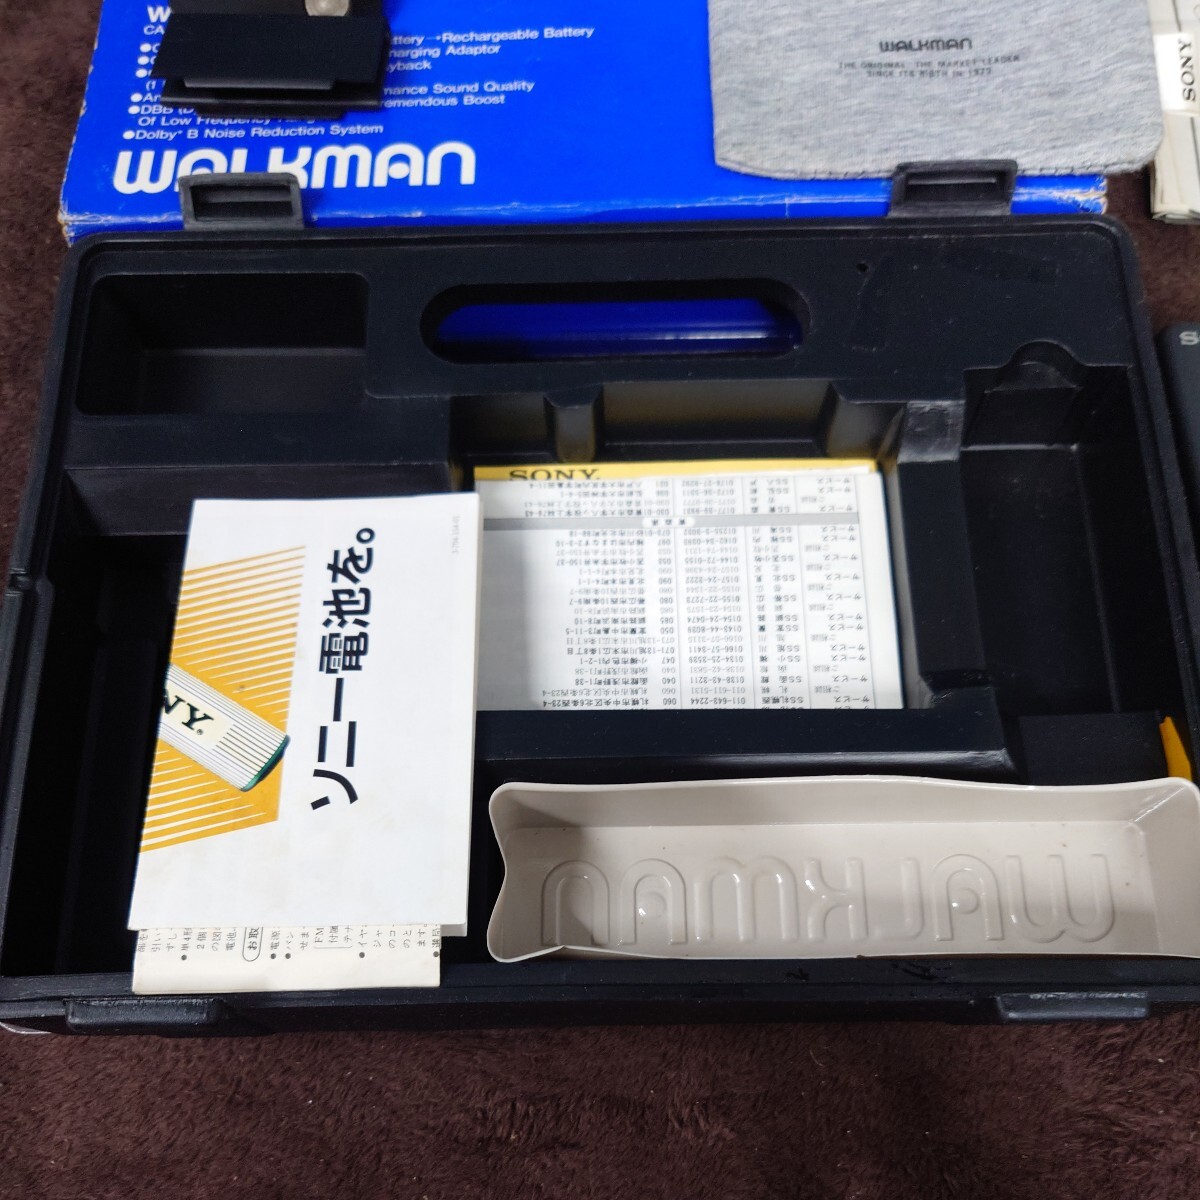 SONY WALKMAN WM-503 secondhand goods present condition goods accessory great number cassette player Walkman Showa Retro Sony 